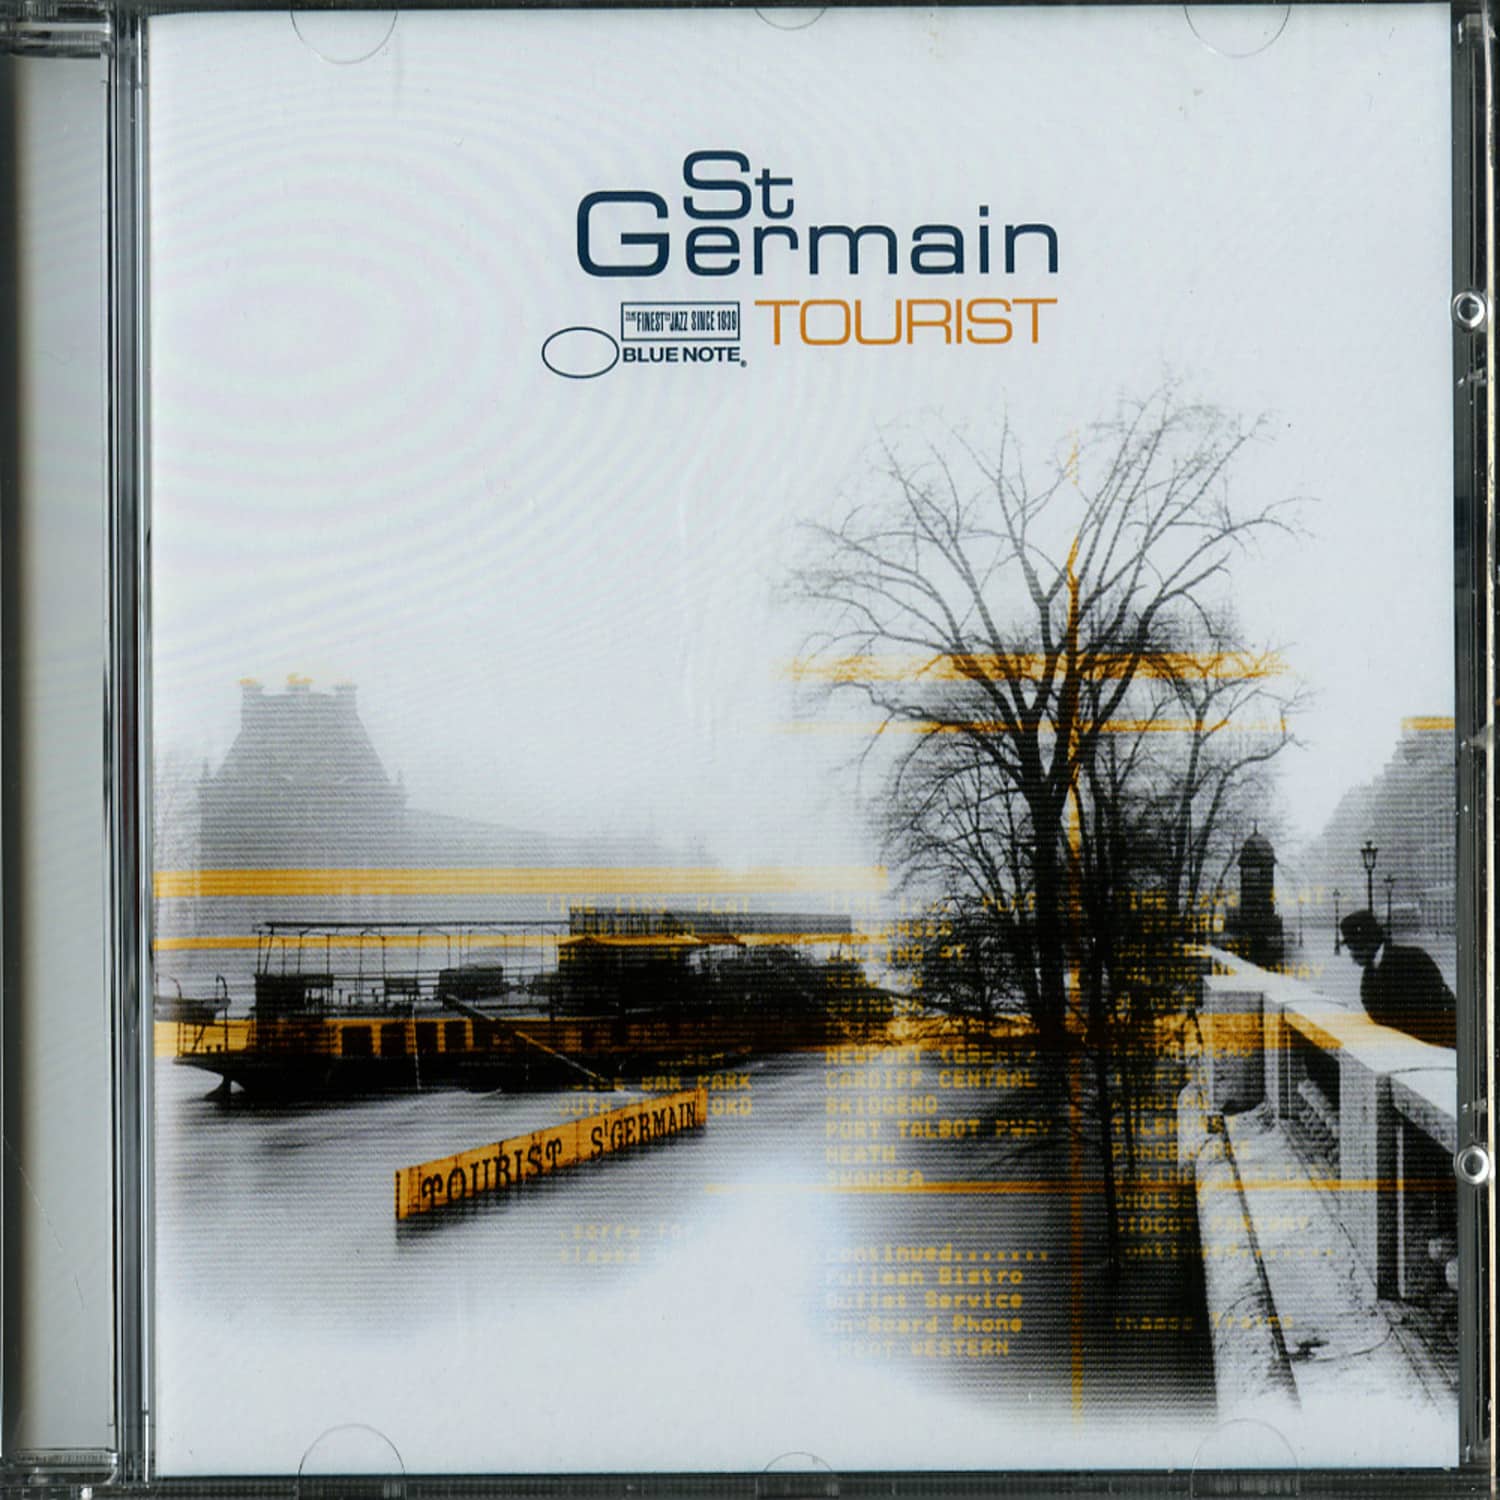 St Germain - TOURIST 